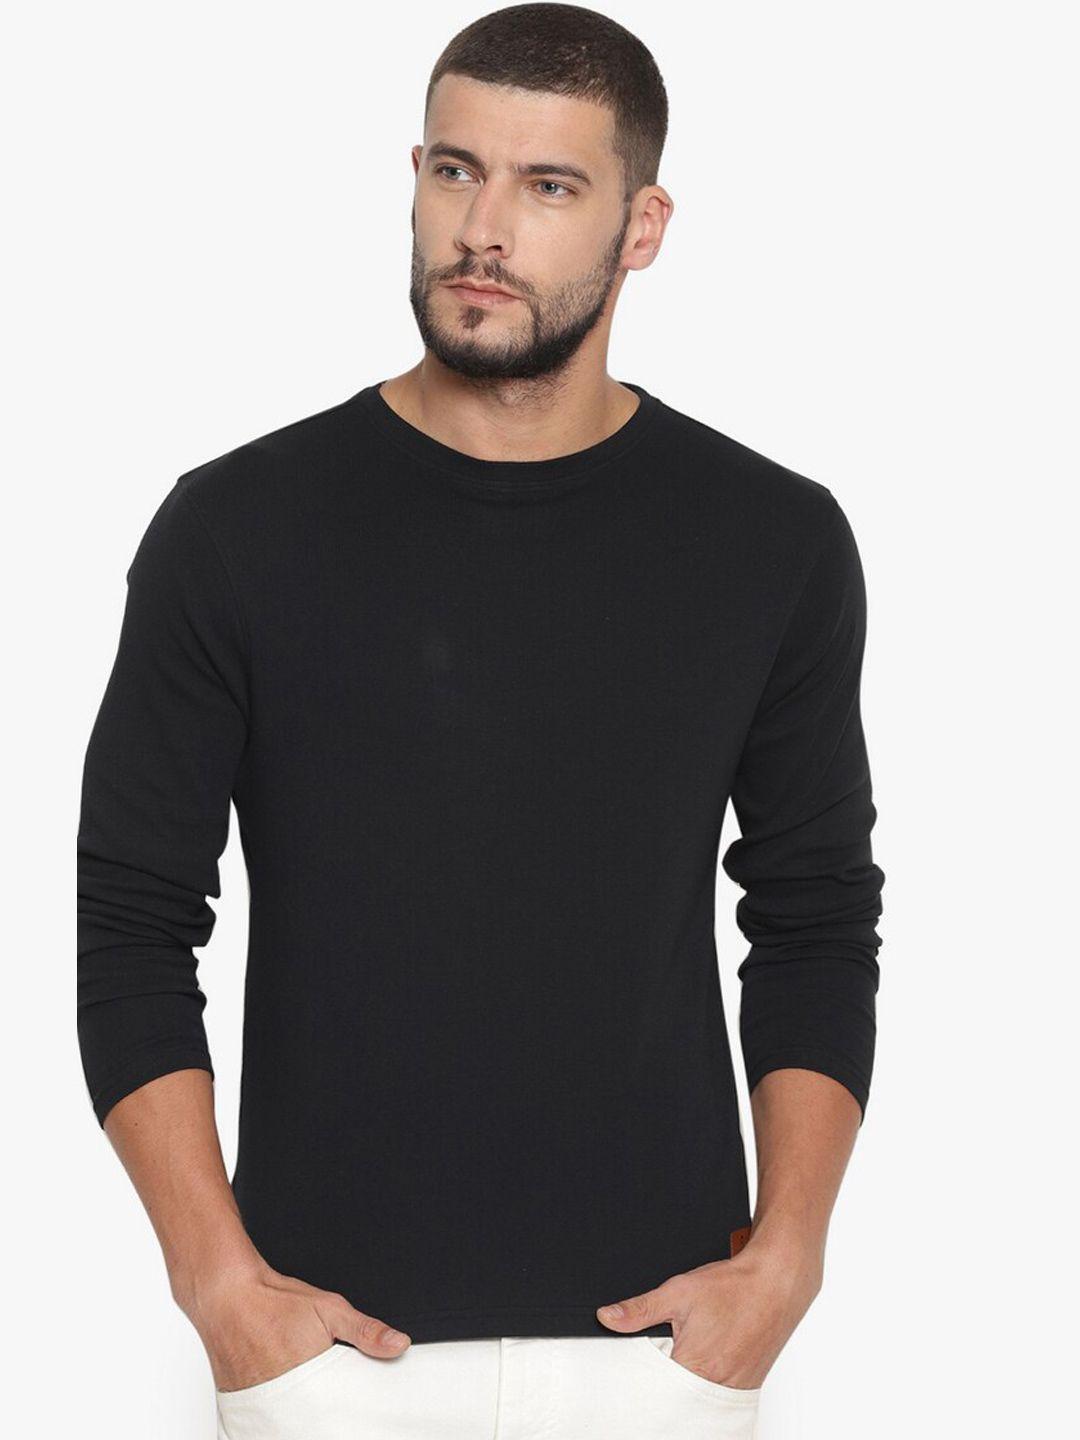 steenbok-men-black-slim-fit-long-sleeve-t-shirt